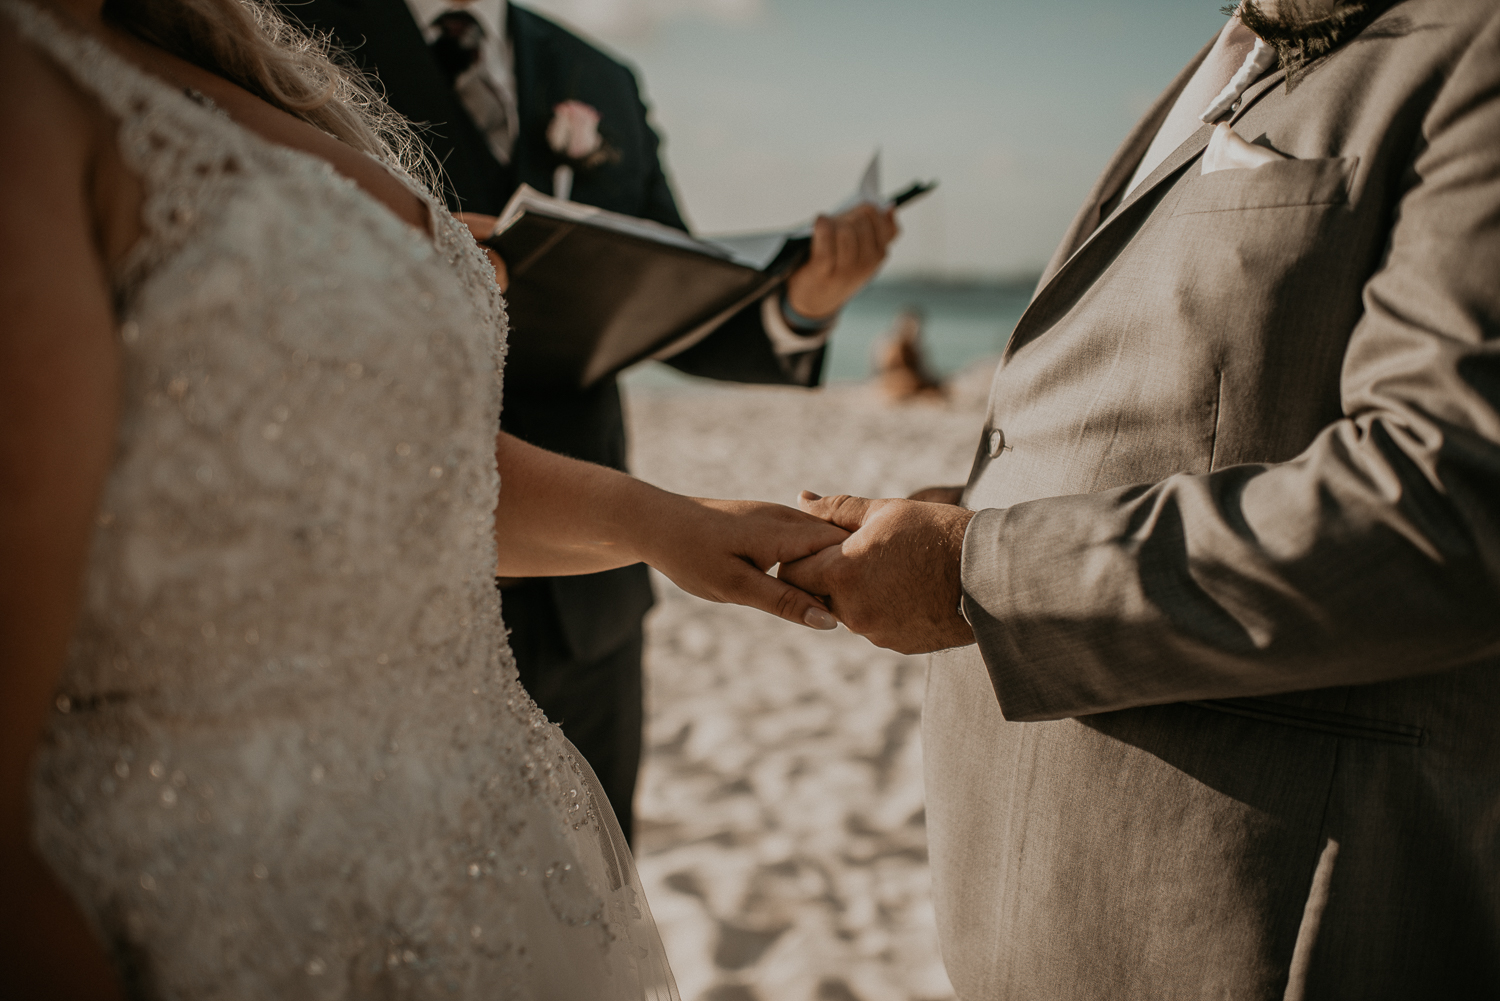 A destination Aruba Elopement wedding ceremony on the beach at Riu Palace